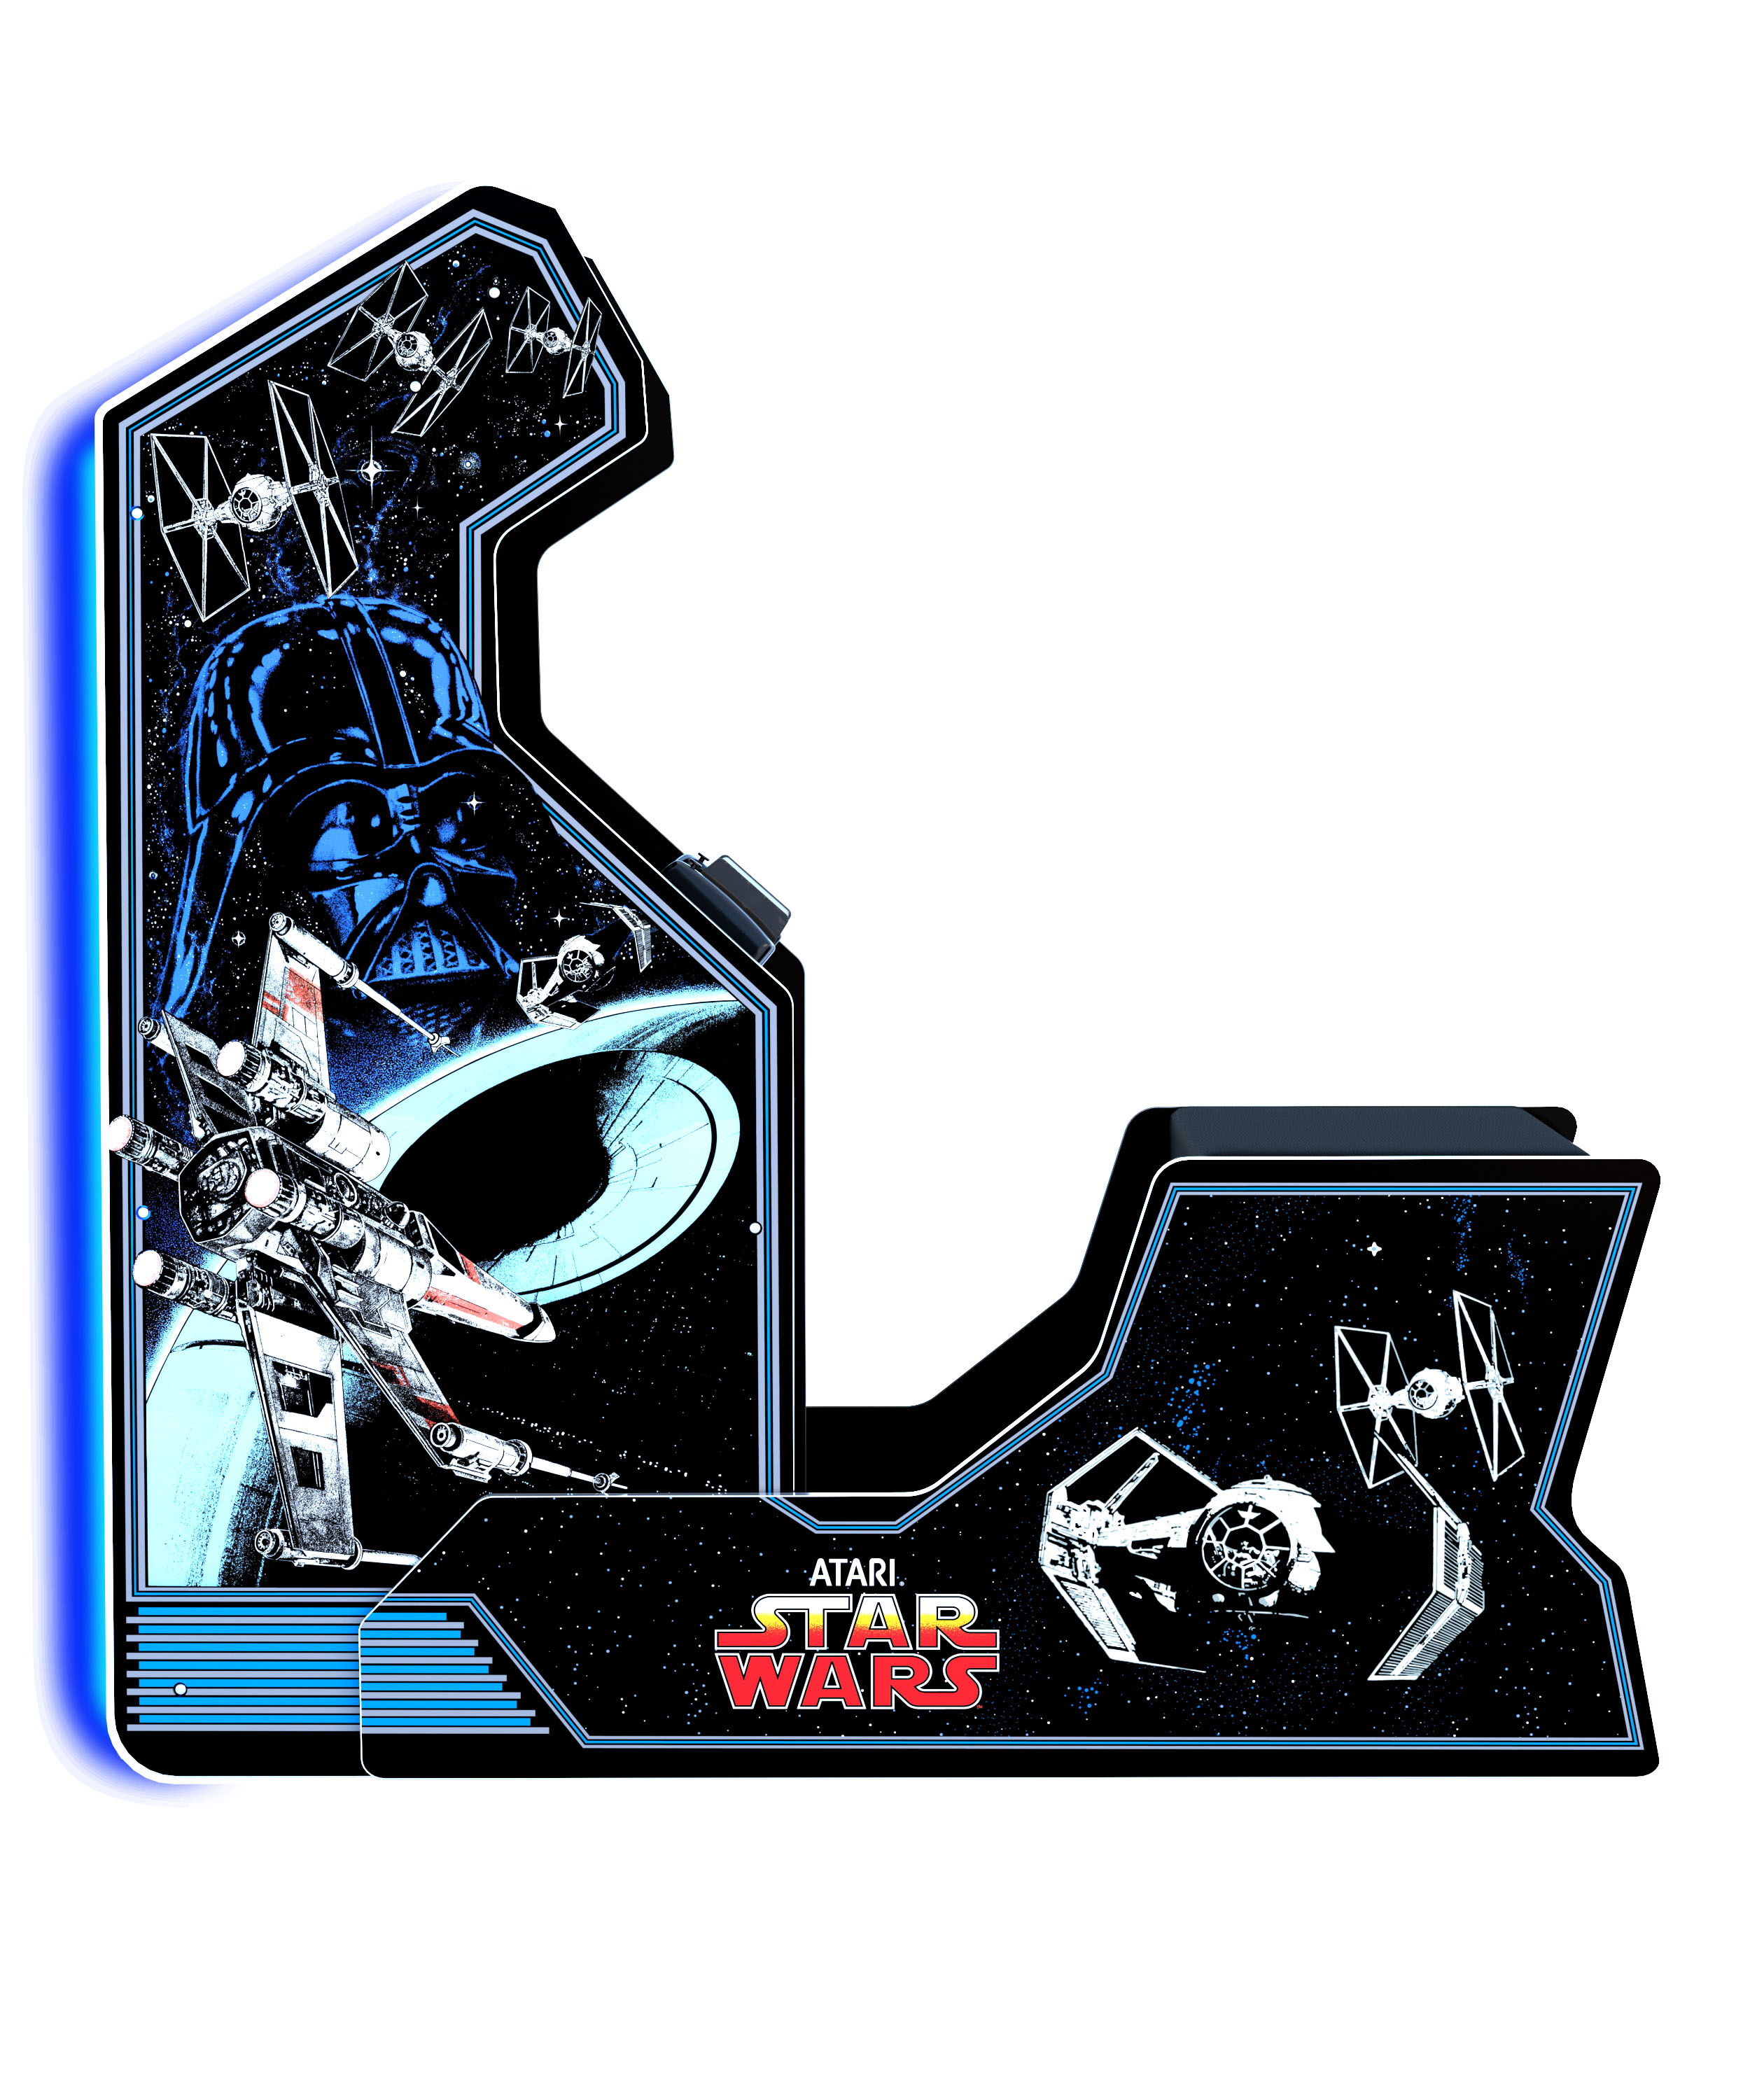 Arcade1Up, Star Wars Arcade Machine With Bench Seat - image 2 of 4